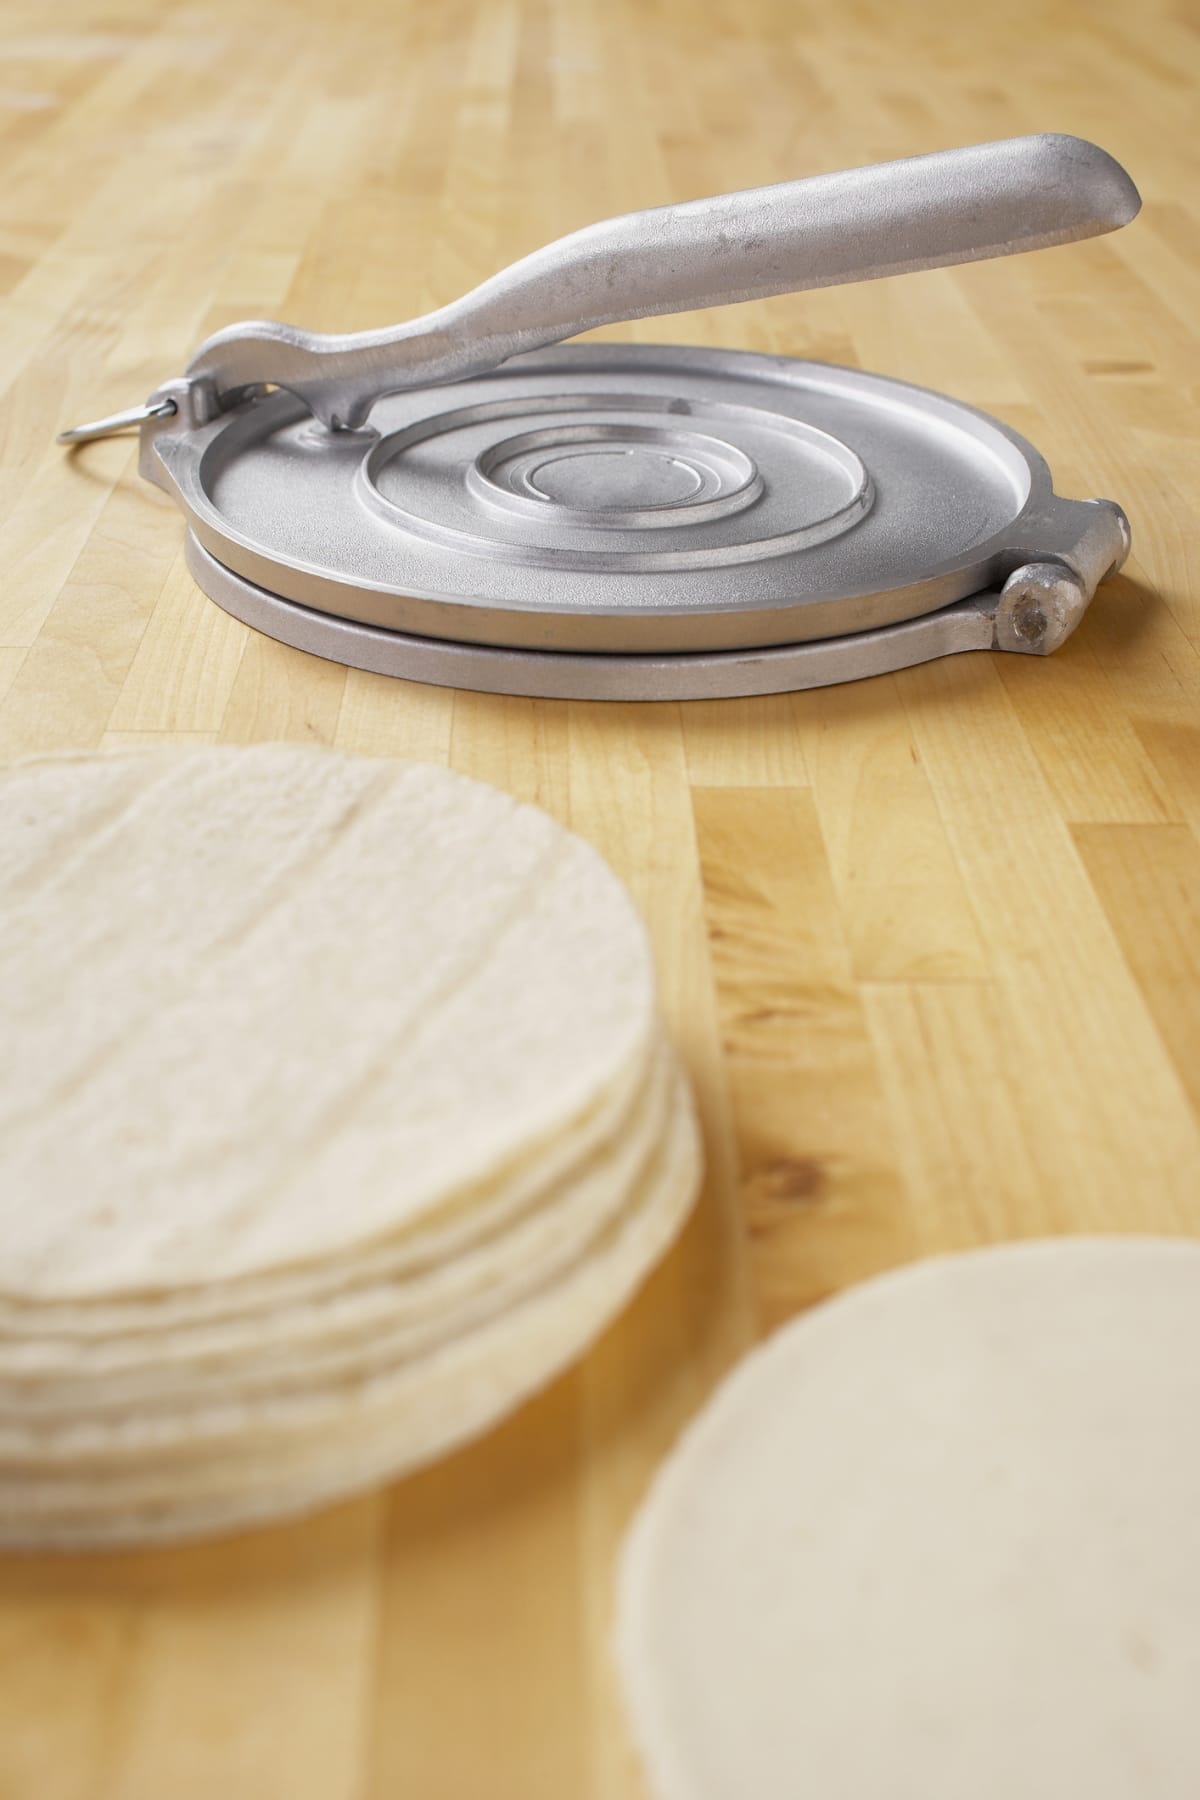 Tortilla press next to stack of flour tortillas